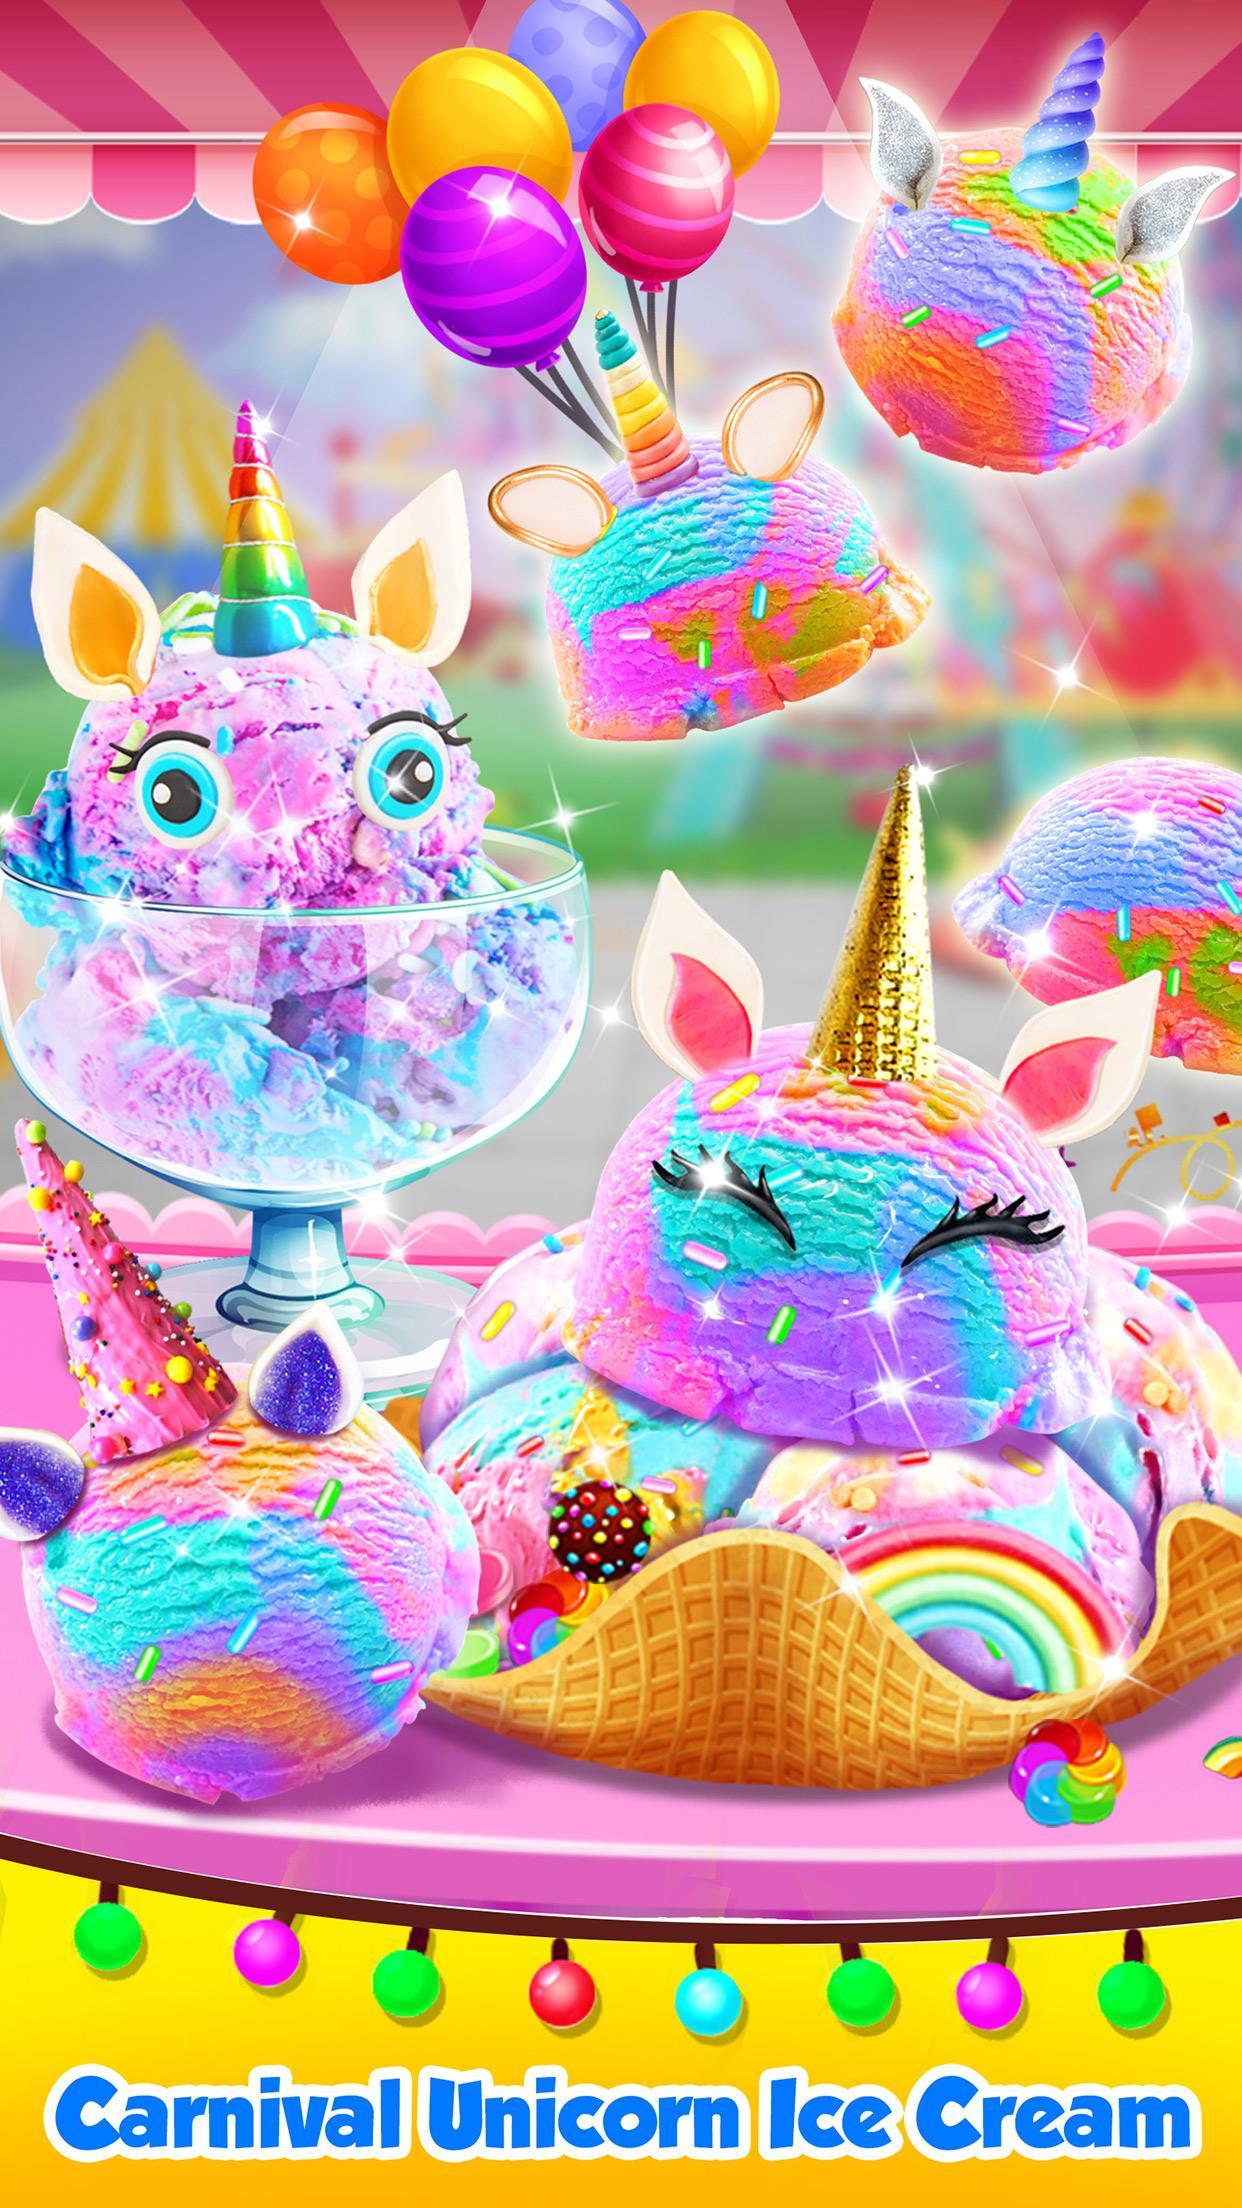 Screenshot 1 of Unicorn ရေခဲမုန့်ဖန်တီးသူ - ပွဲတော်ကြီးမျှတသောအစားအစာ 2018 1.8